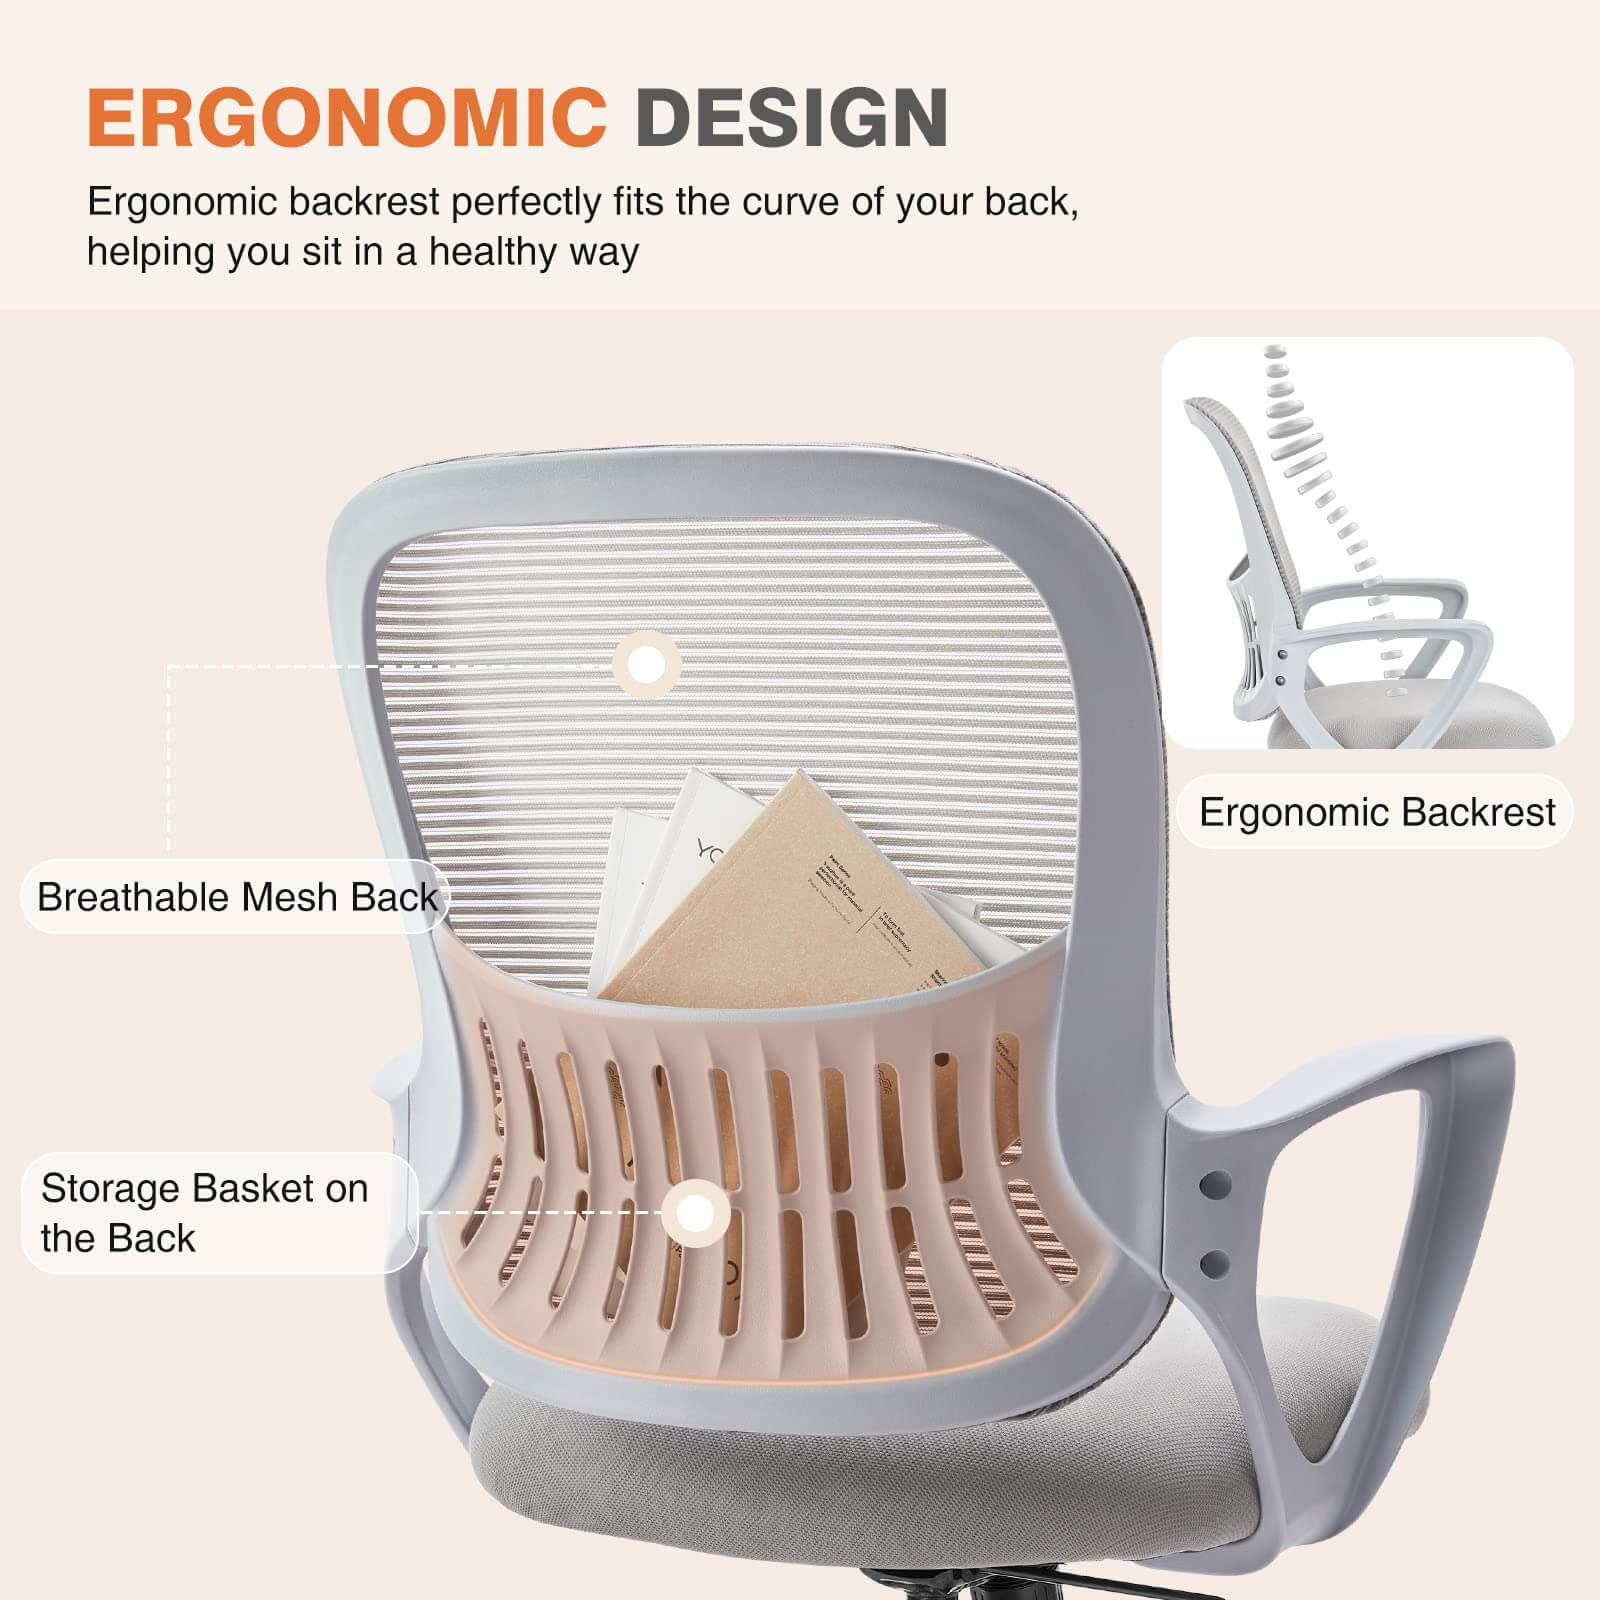 office-chair-ergonomic#Quantity_1 Chair#Color_Grey